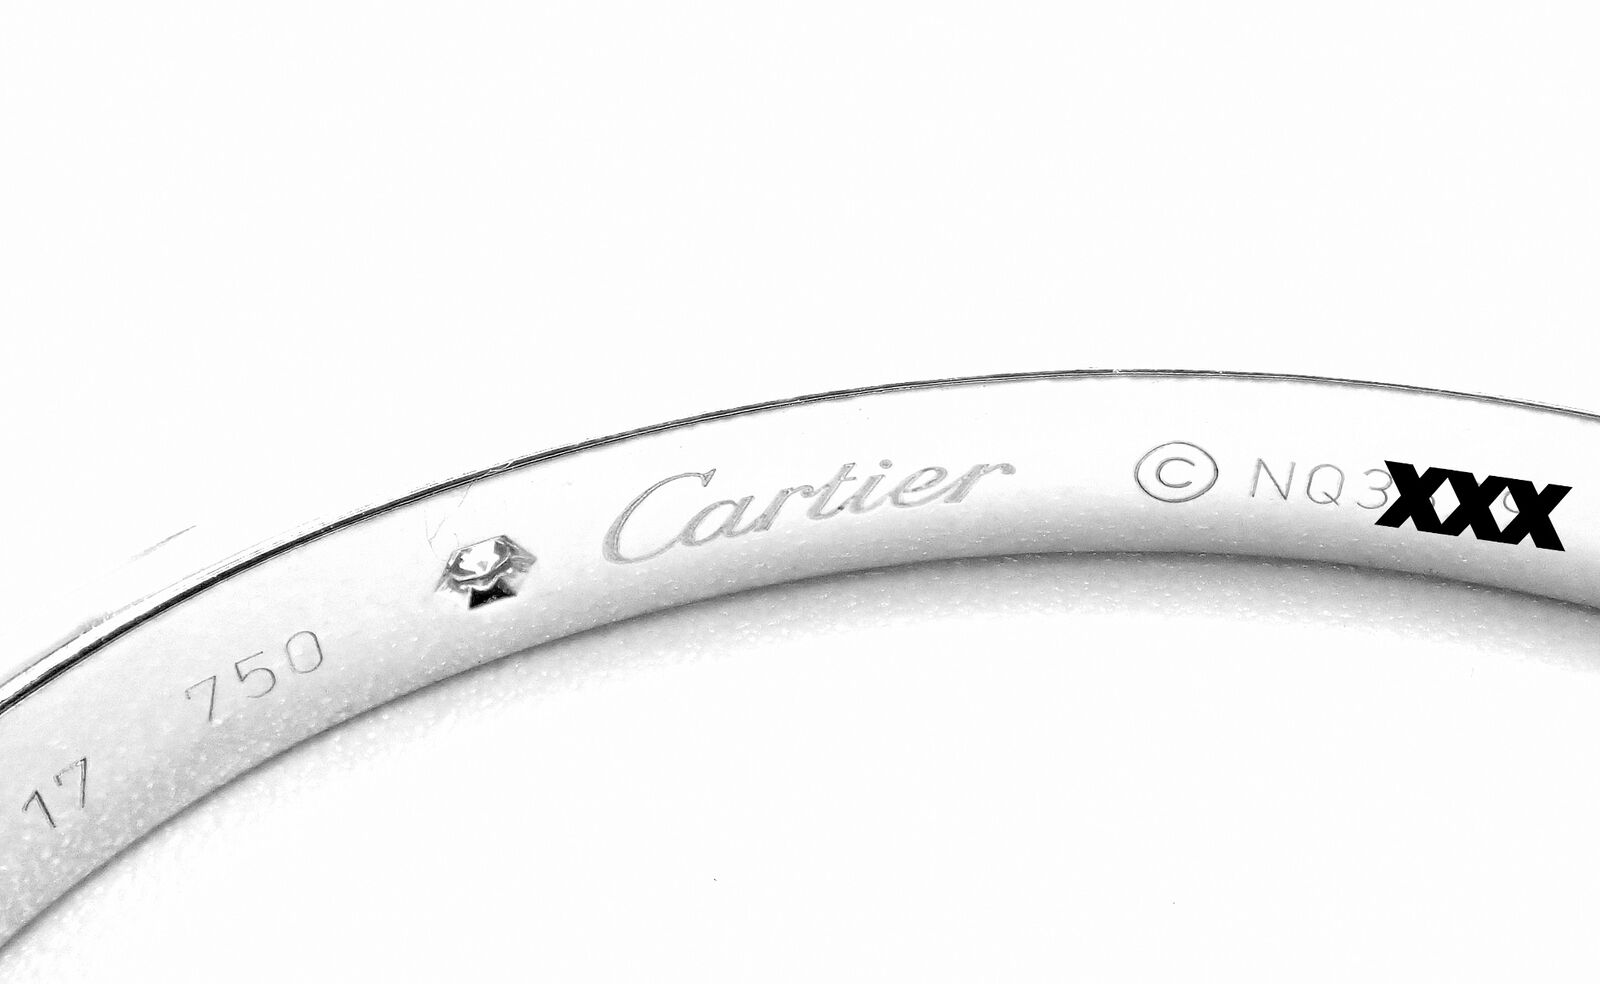 Cartier Jewelry & Watches:Fine Jewelry:Bracelets & Charms Authentic! Cartier 18k White Gold 4 Diamond Love Bangle Bracelet Size 17 Cert.